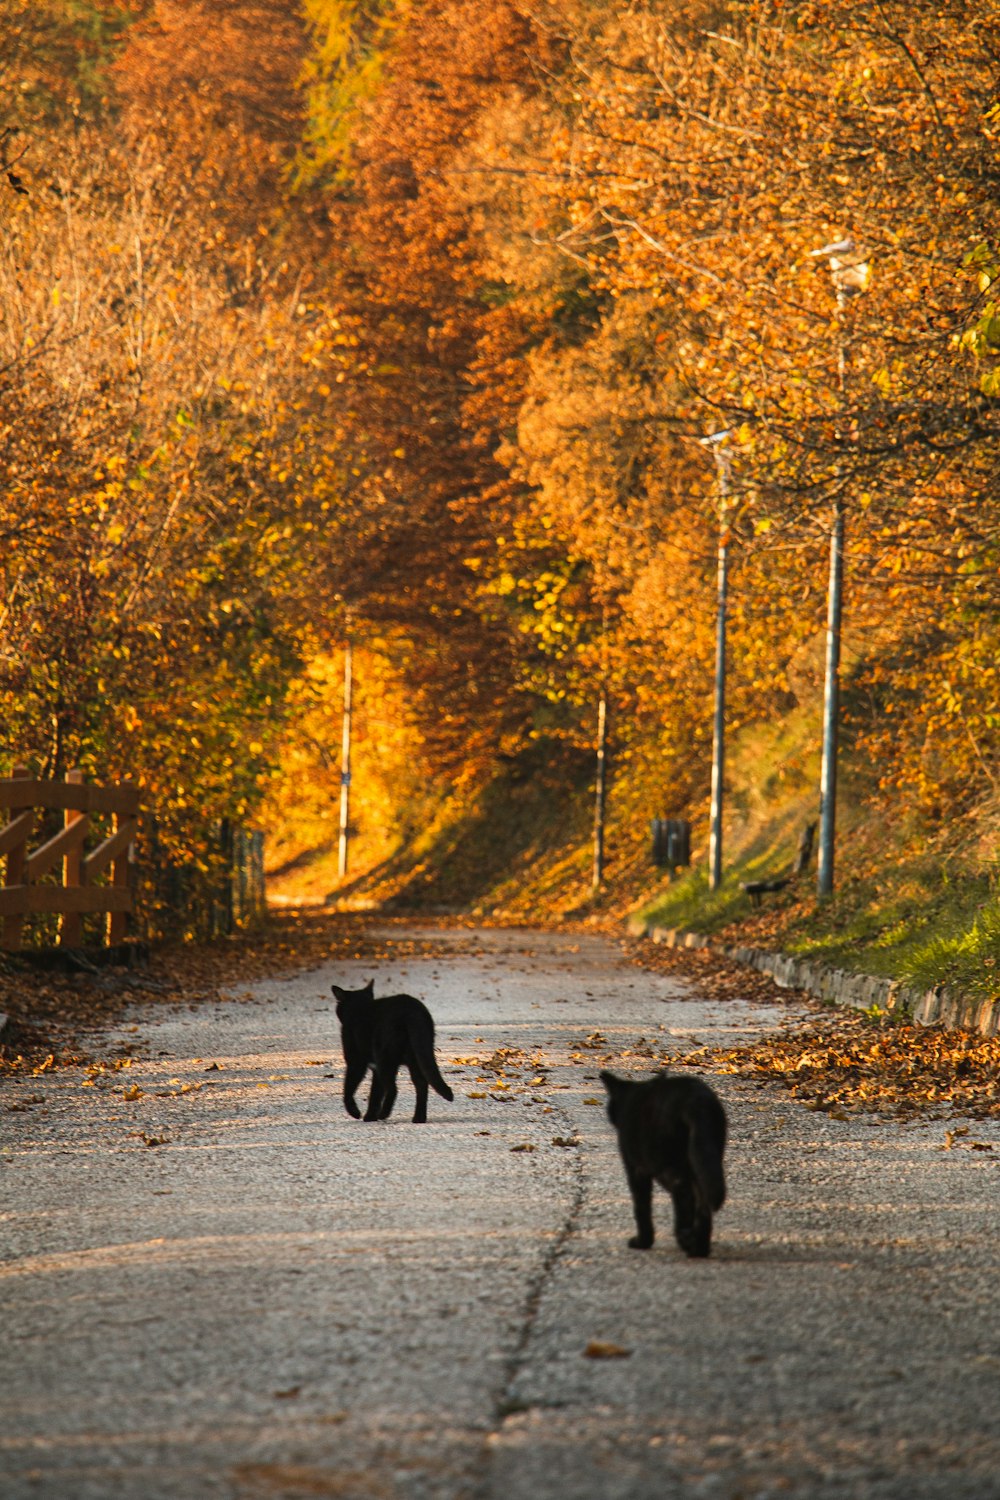 black cat walking on road between trees during daytime